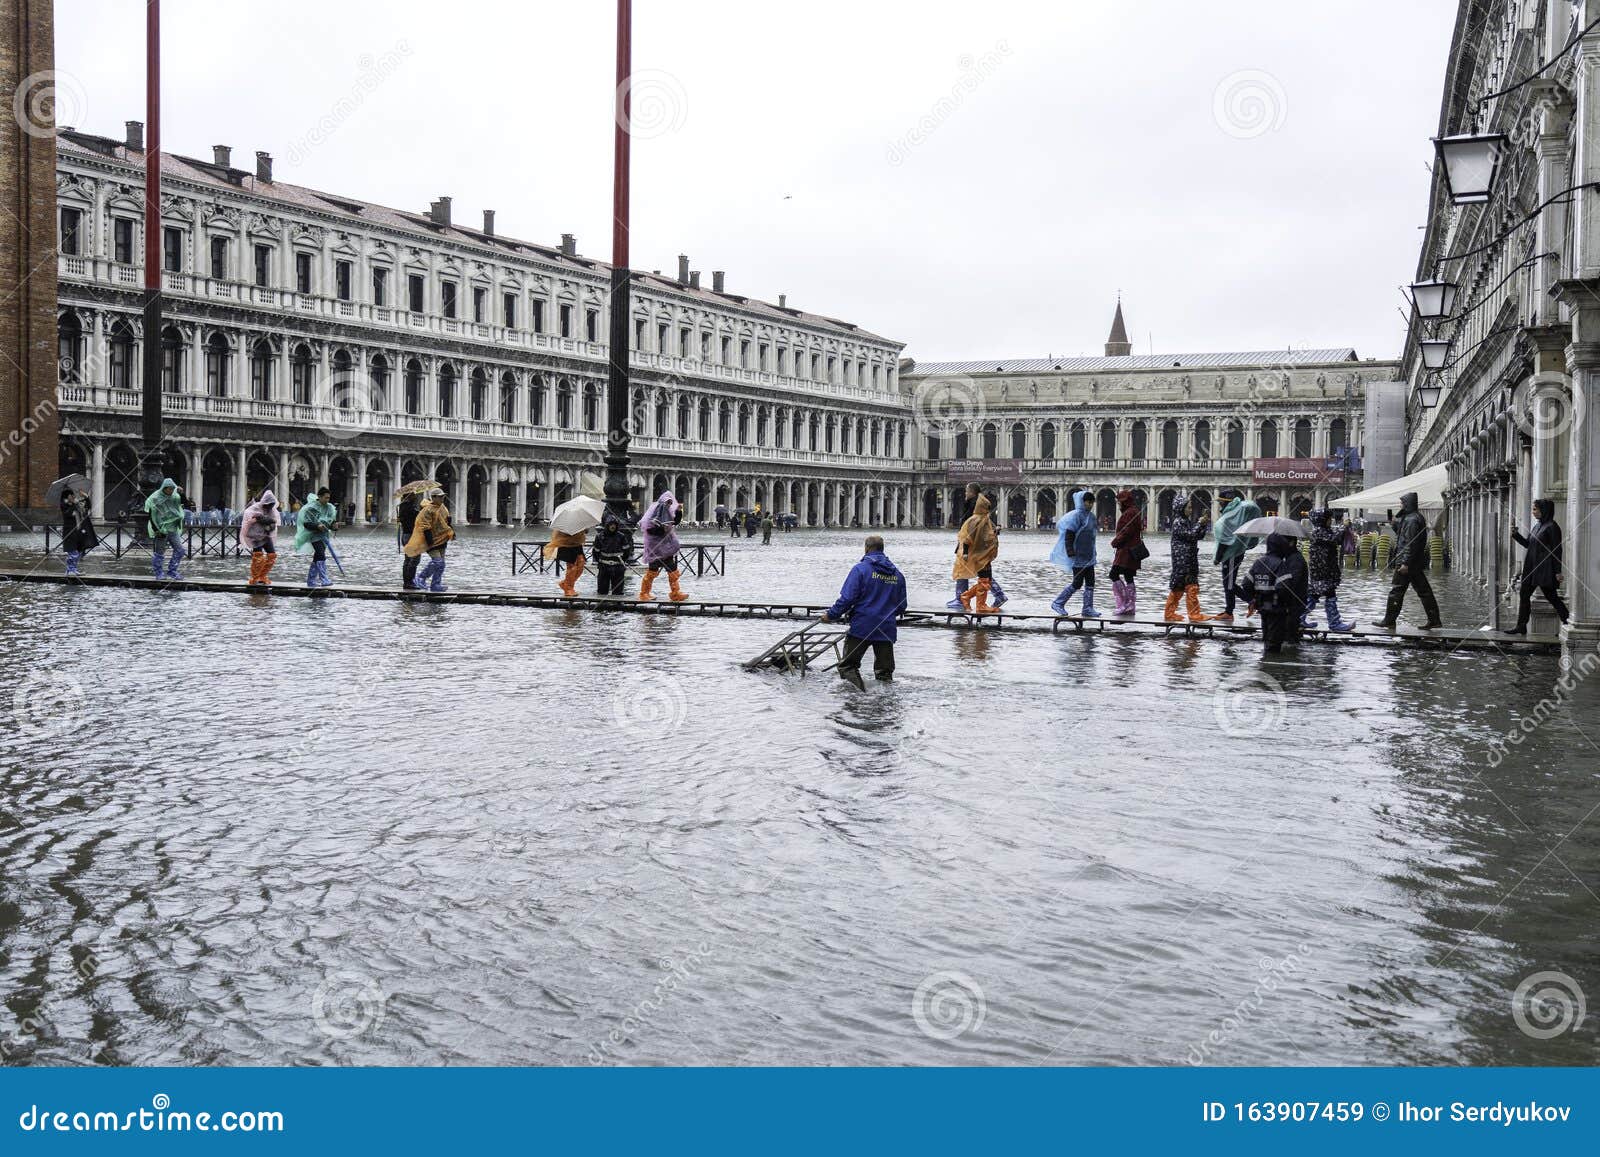 Venice Italy November 12 2019 St Marks Square Piazza